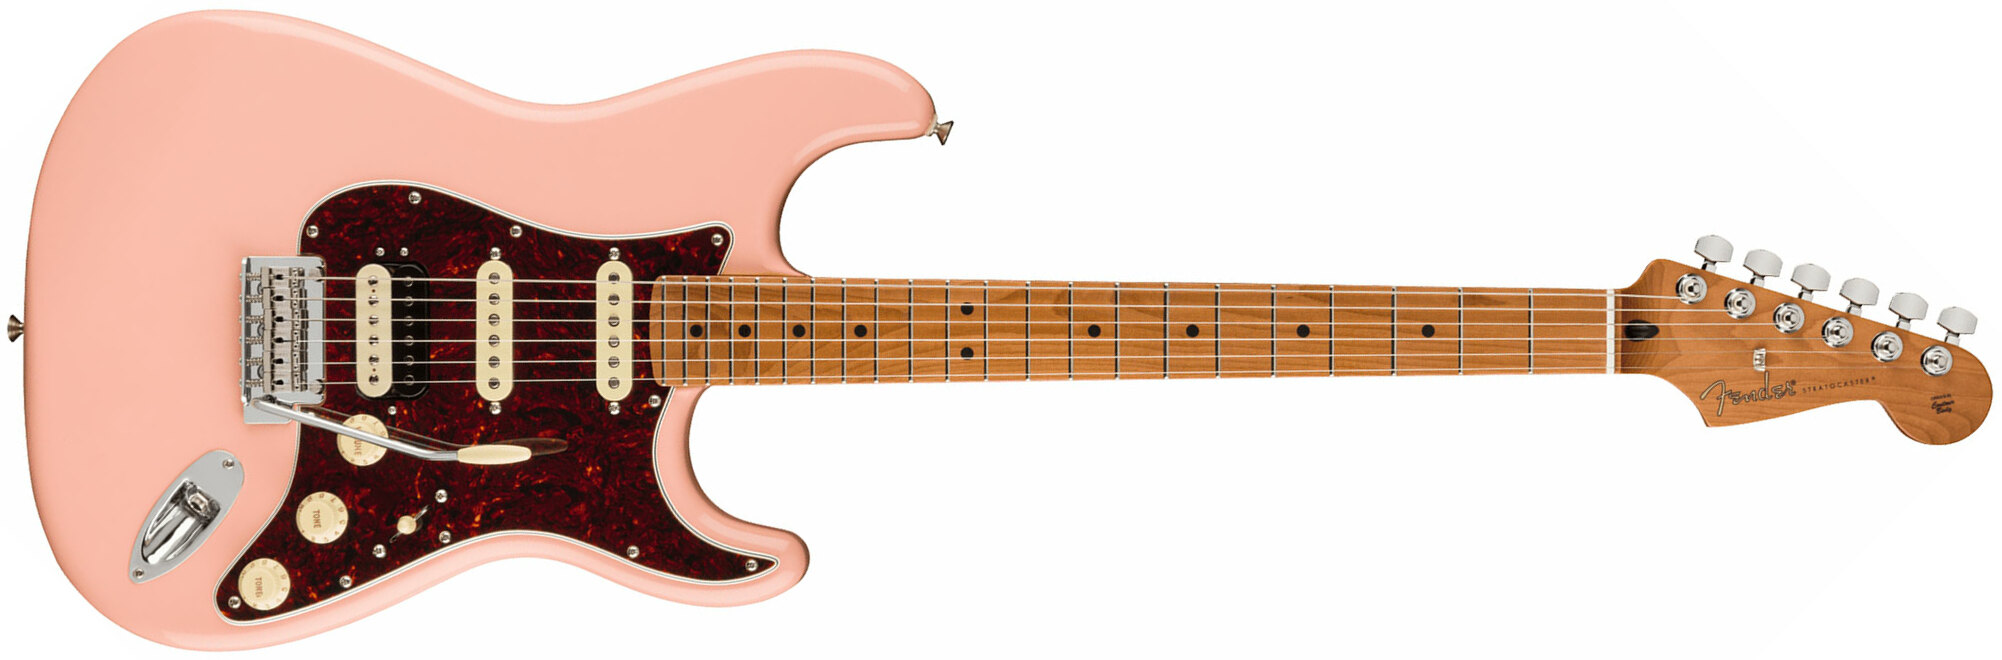 Fender Strat Player Roasted Neck Ltd Mex Hss Trem Mn - Shell Pink - Guitarra eléctrica con forma de str. - Main picture